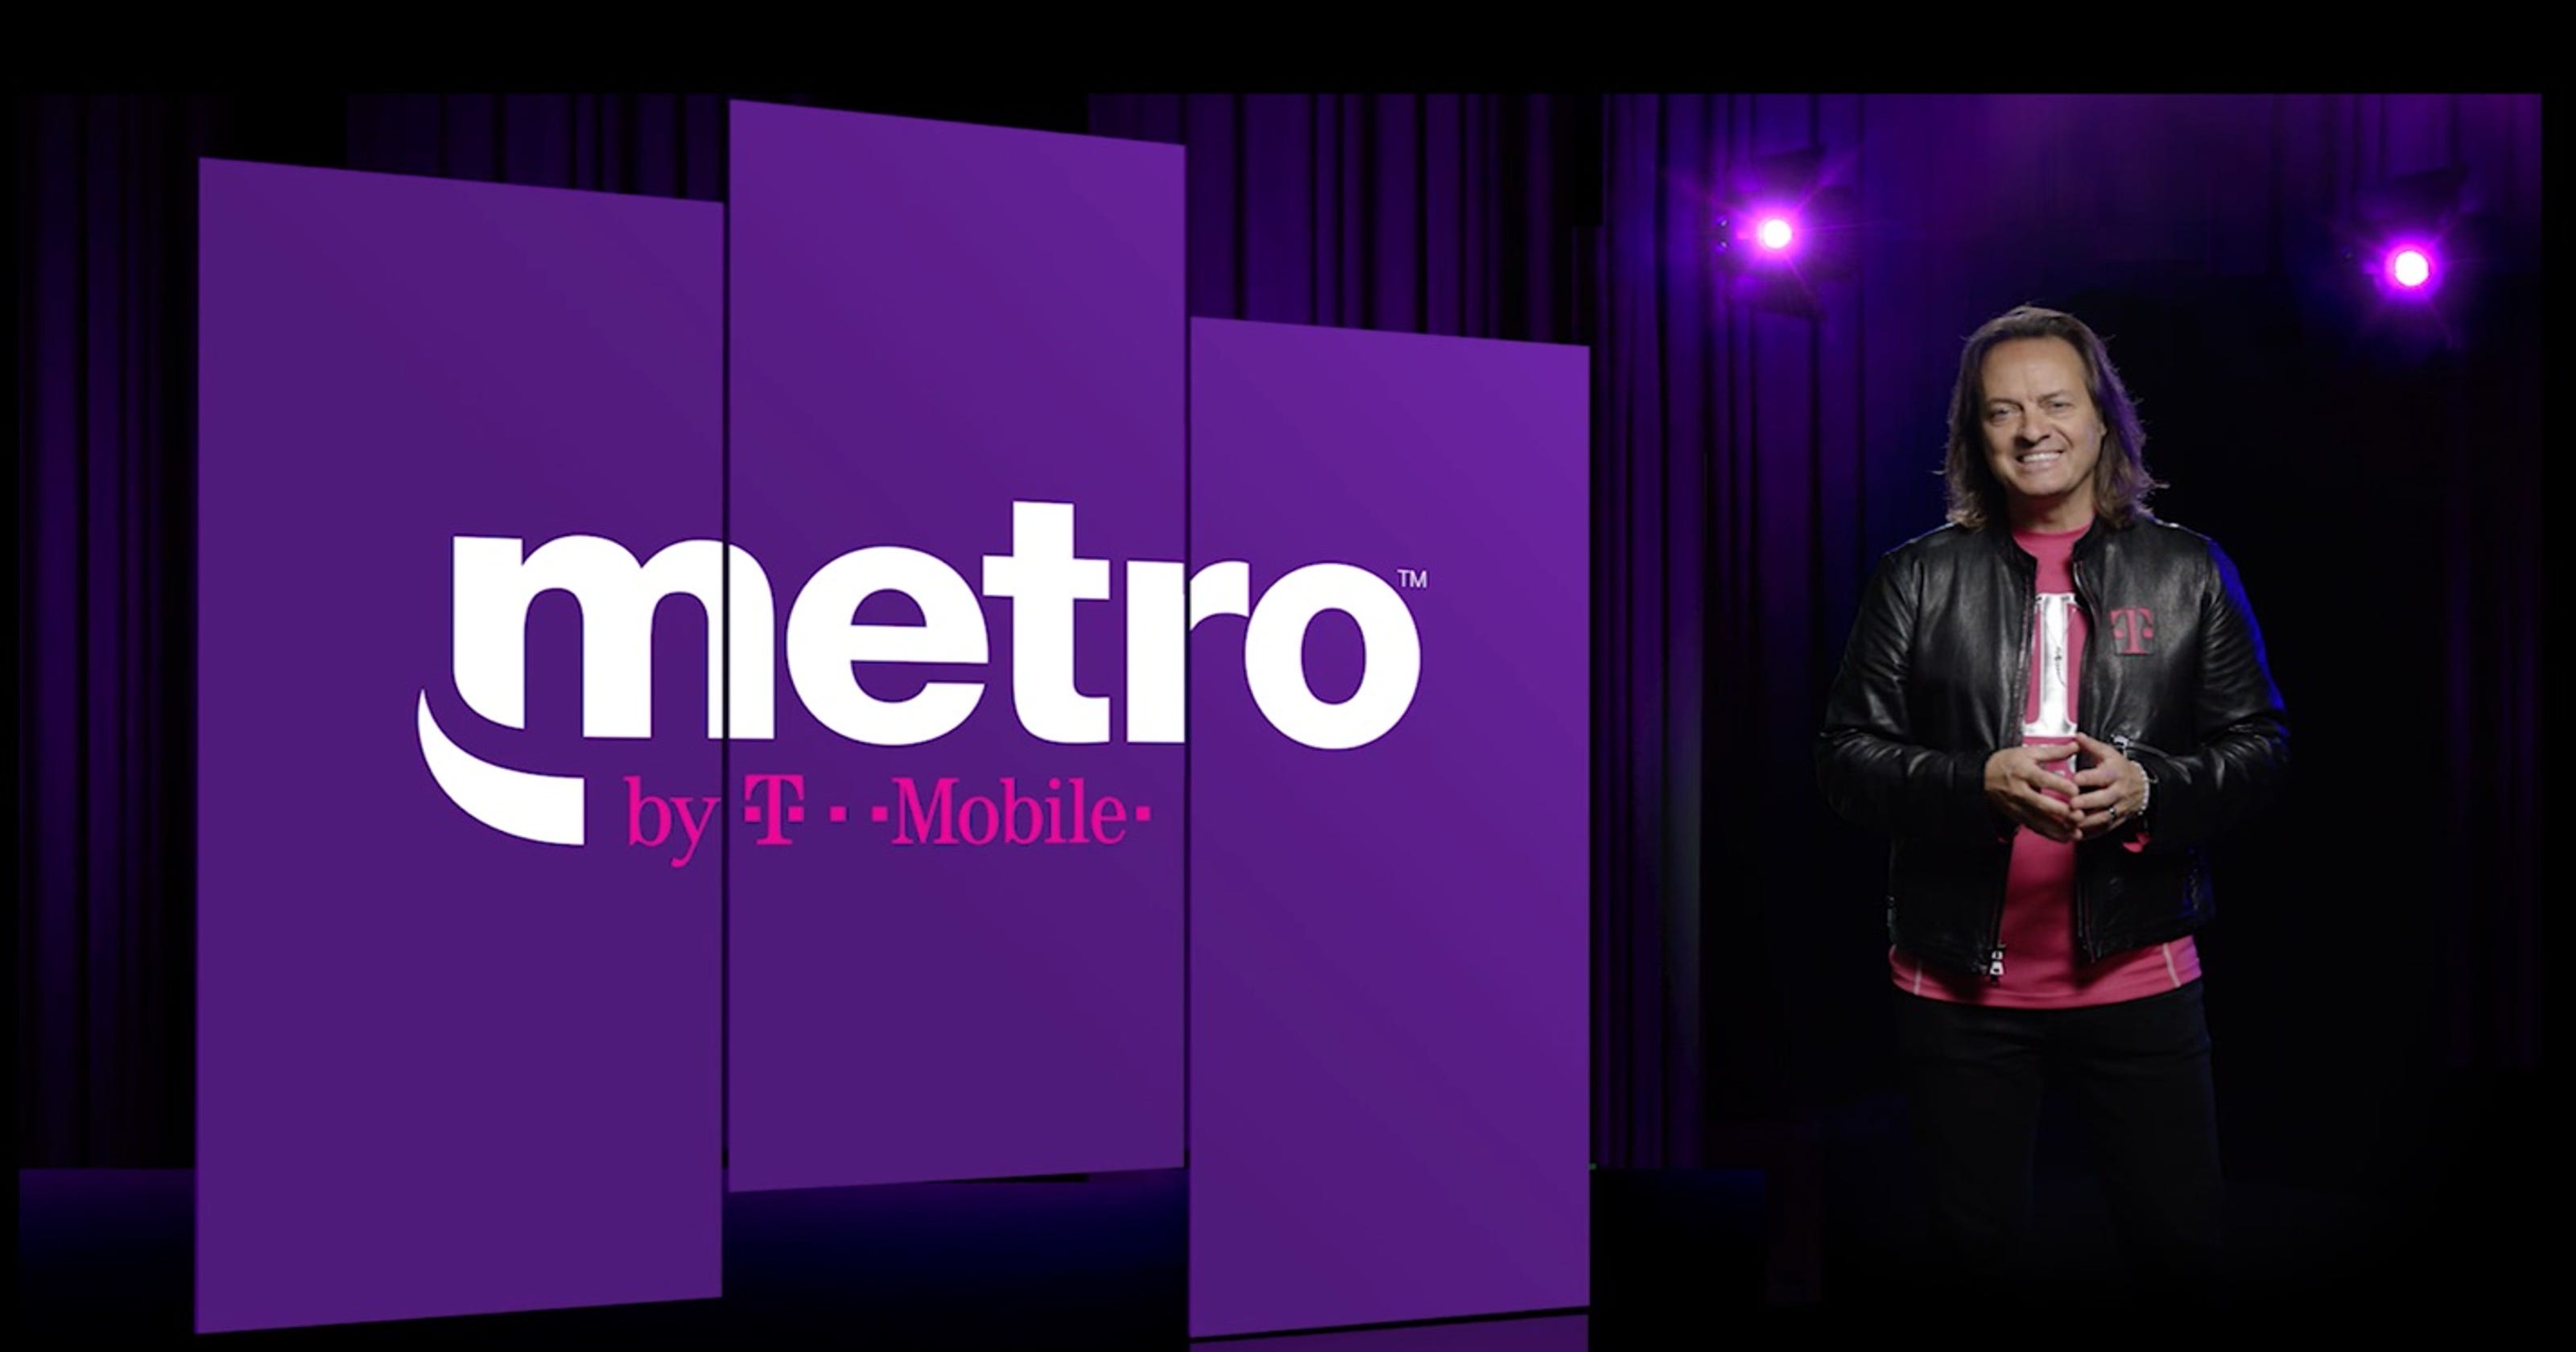 t-mobile-s-metro-brand-promises-5g-wireless-service-in-2019